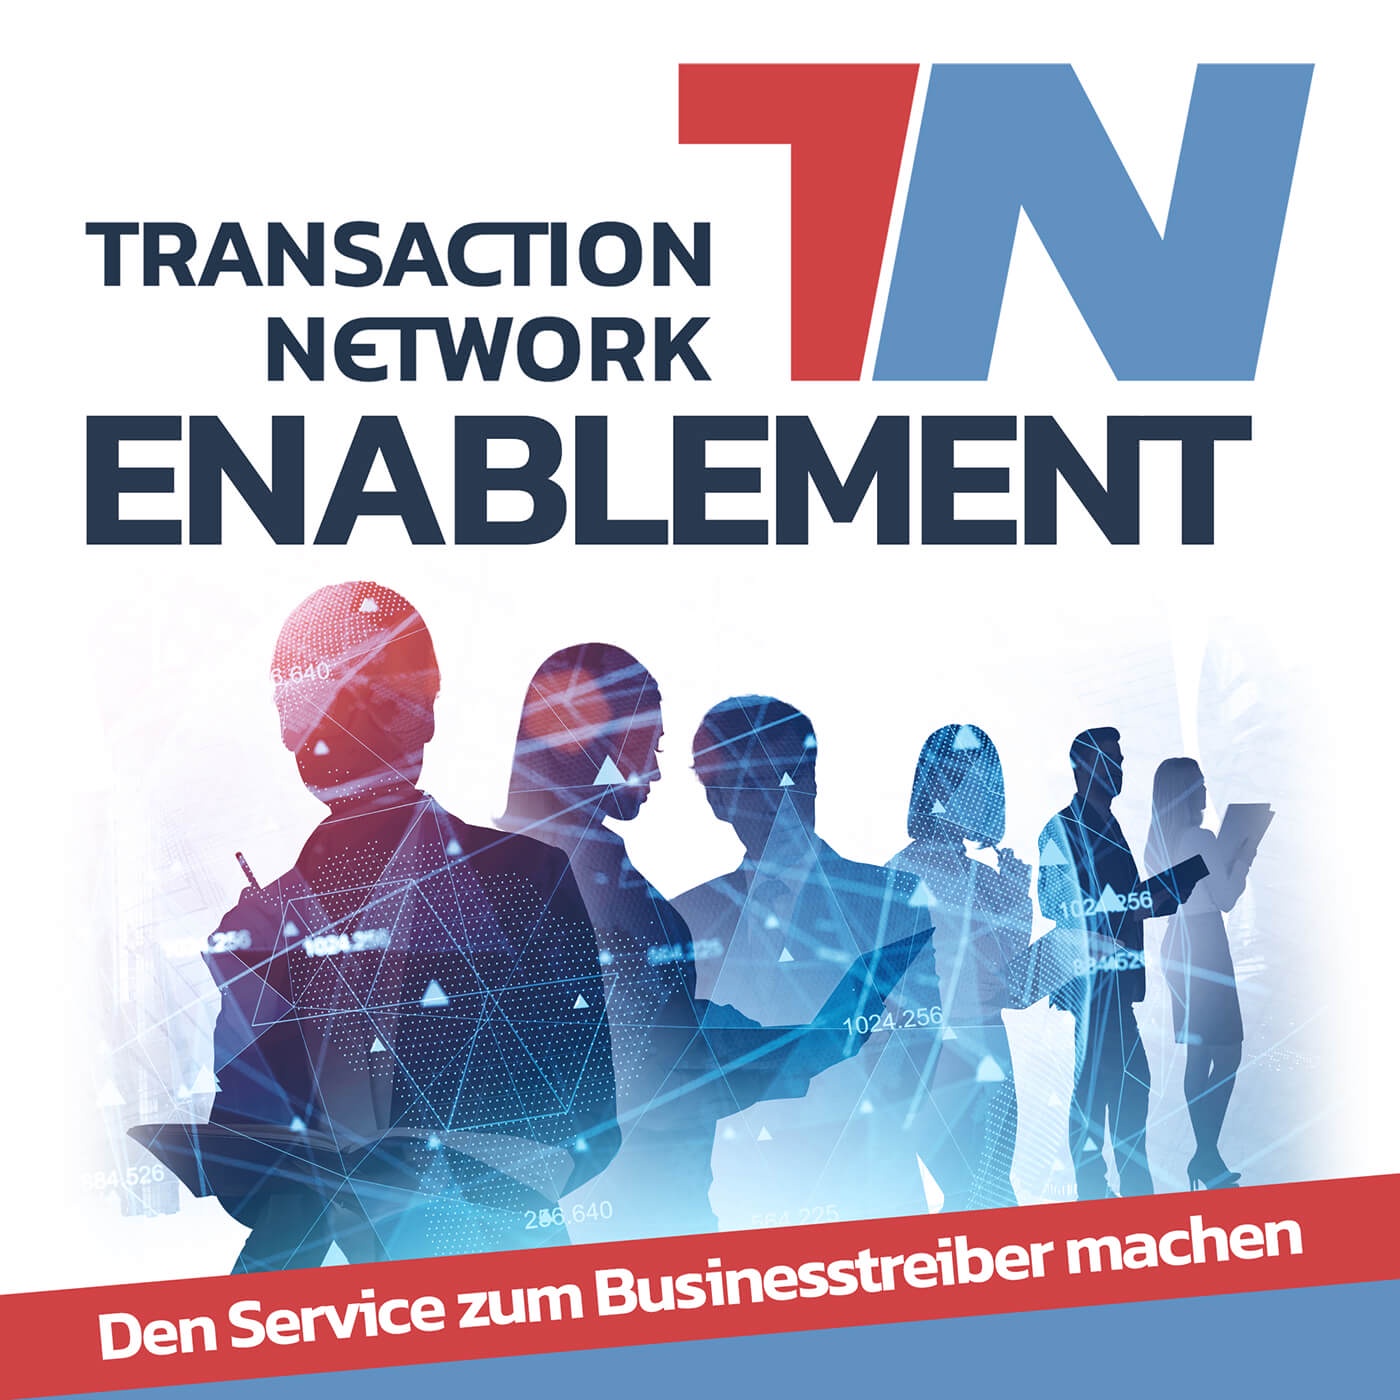 Transaction Network - ENABLEMENT